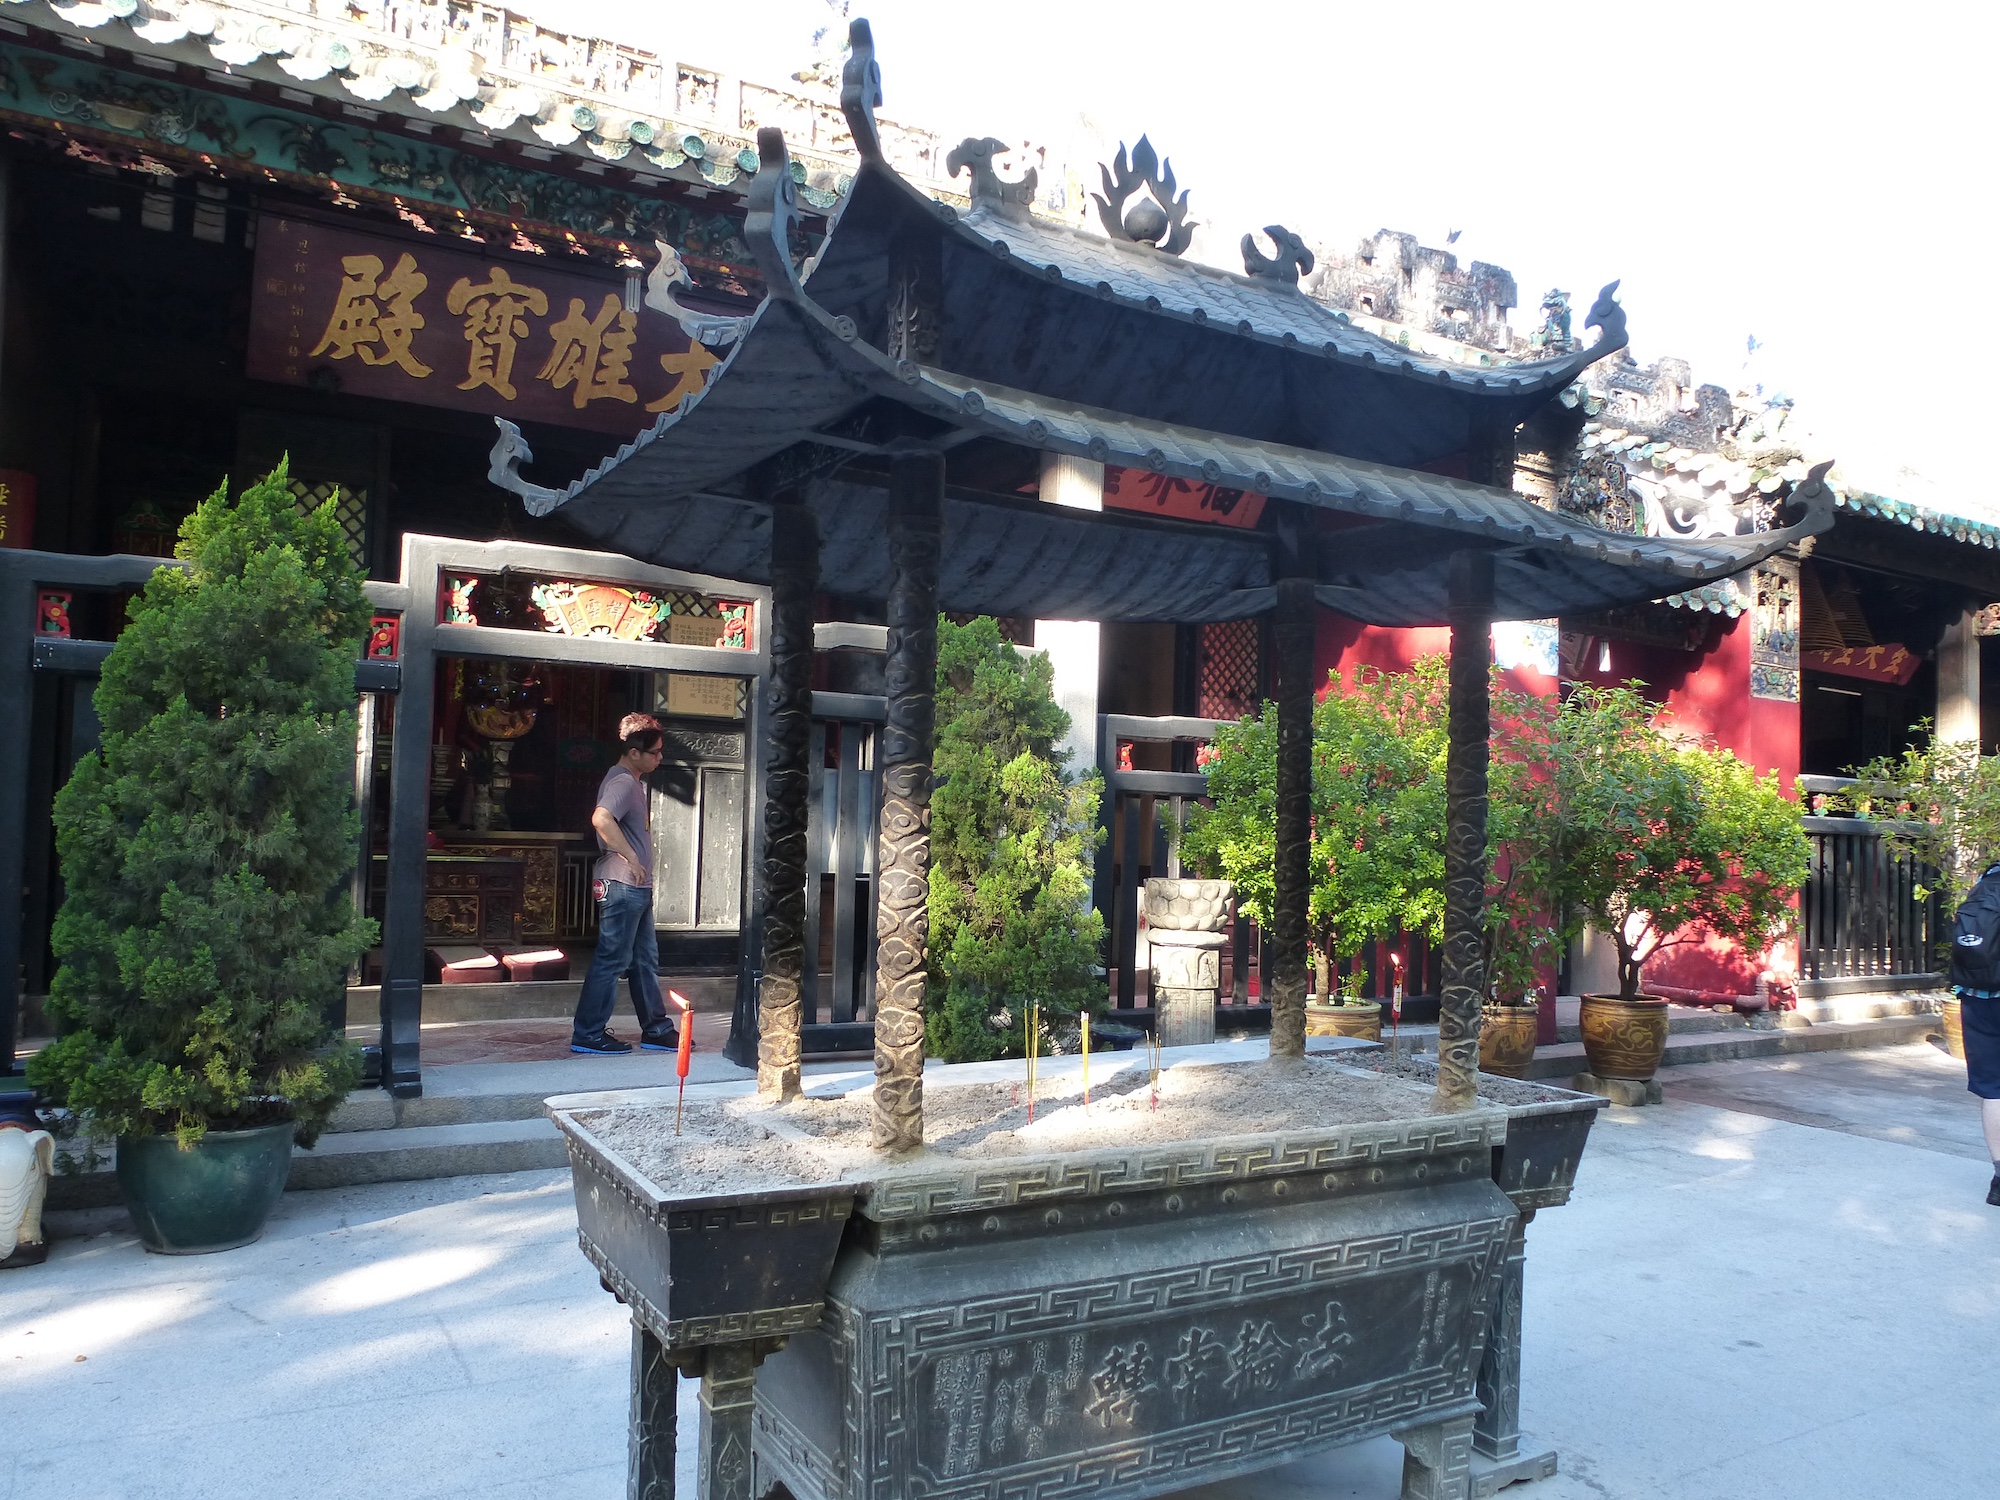 Culture bureau calls police again over illegal renovation work at Kun Iam Temple